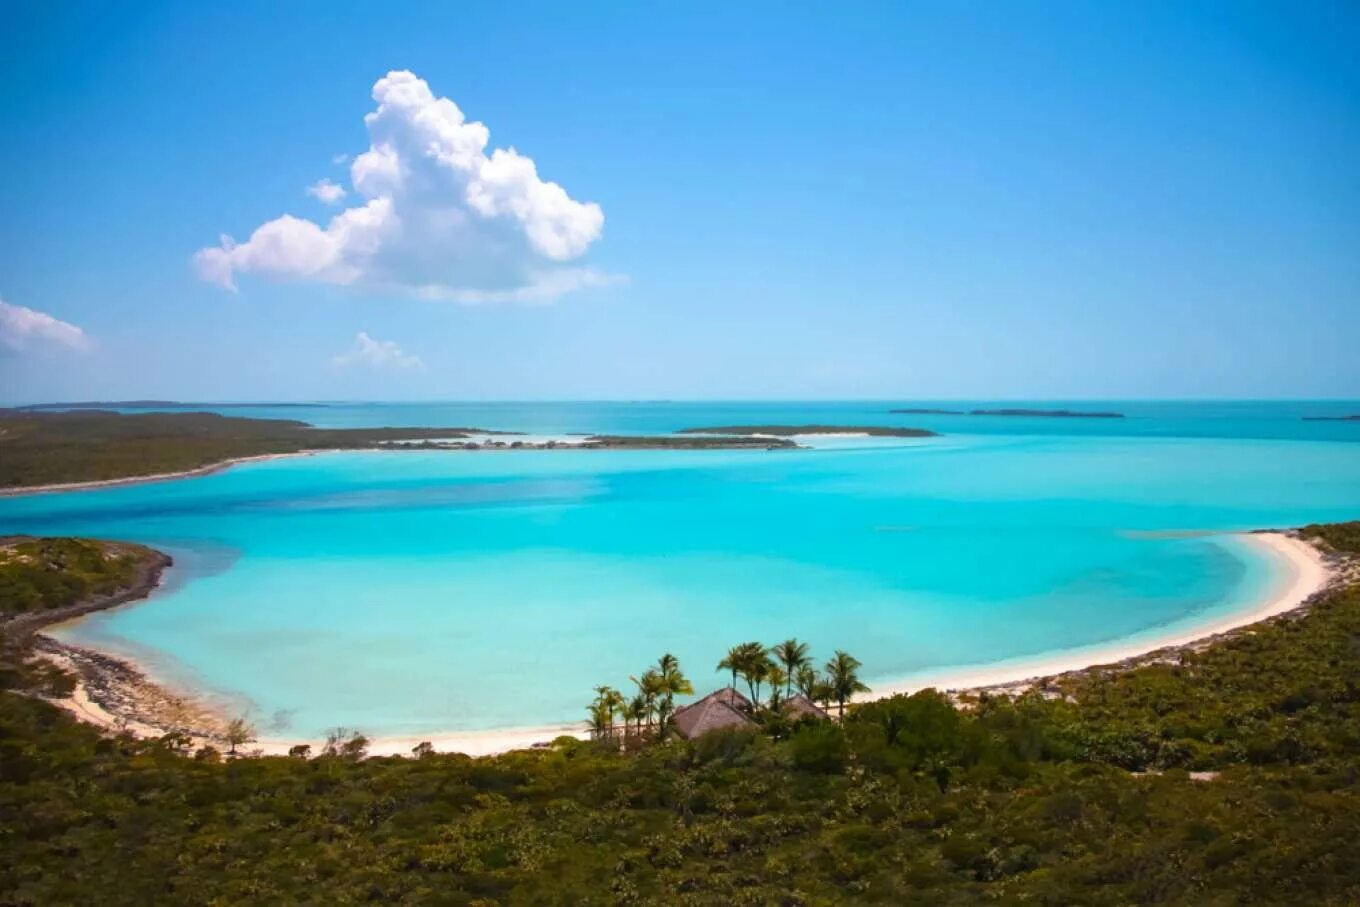 Bahamas islands. Musha cay, Багамы. Остров Муша Кей. Musha cay (Маша Кей), Багамы. Виргинские острова Багамы.